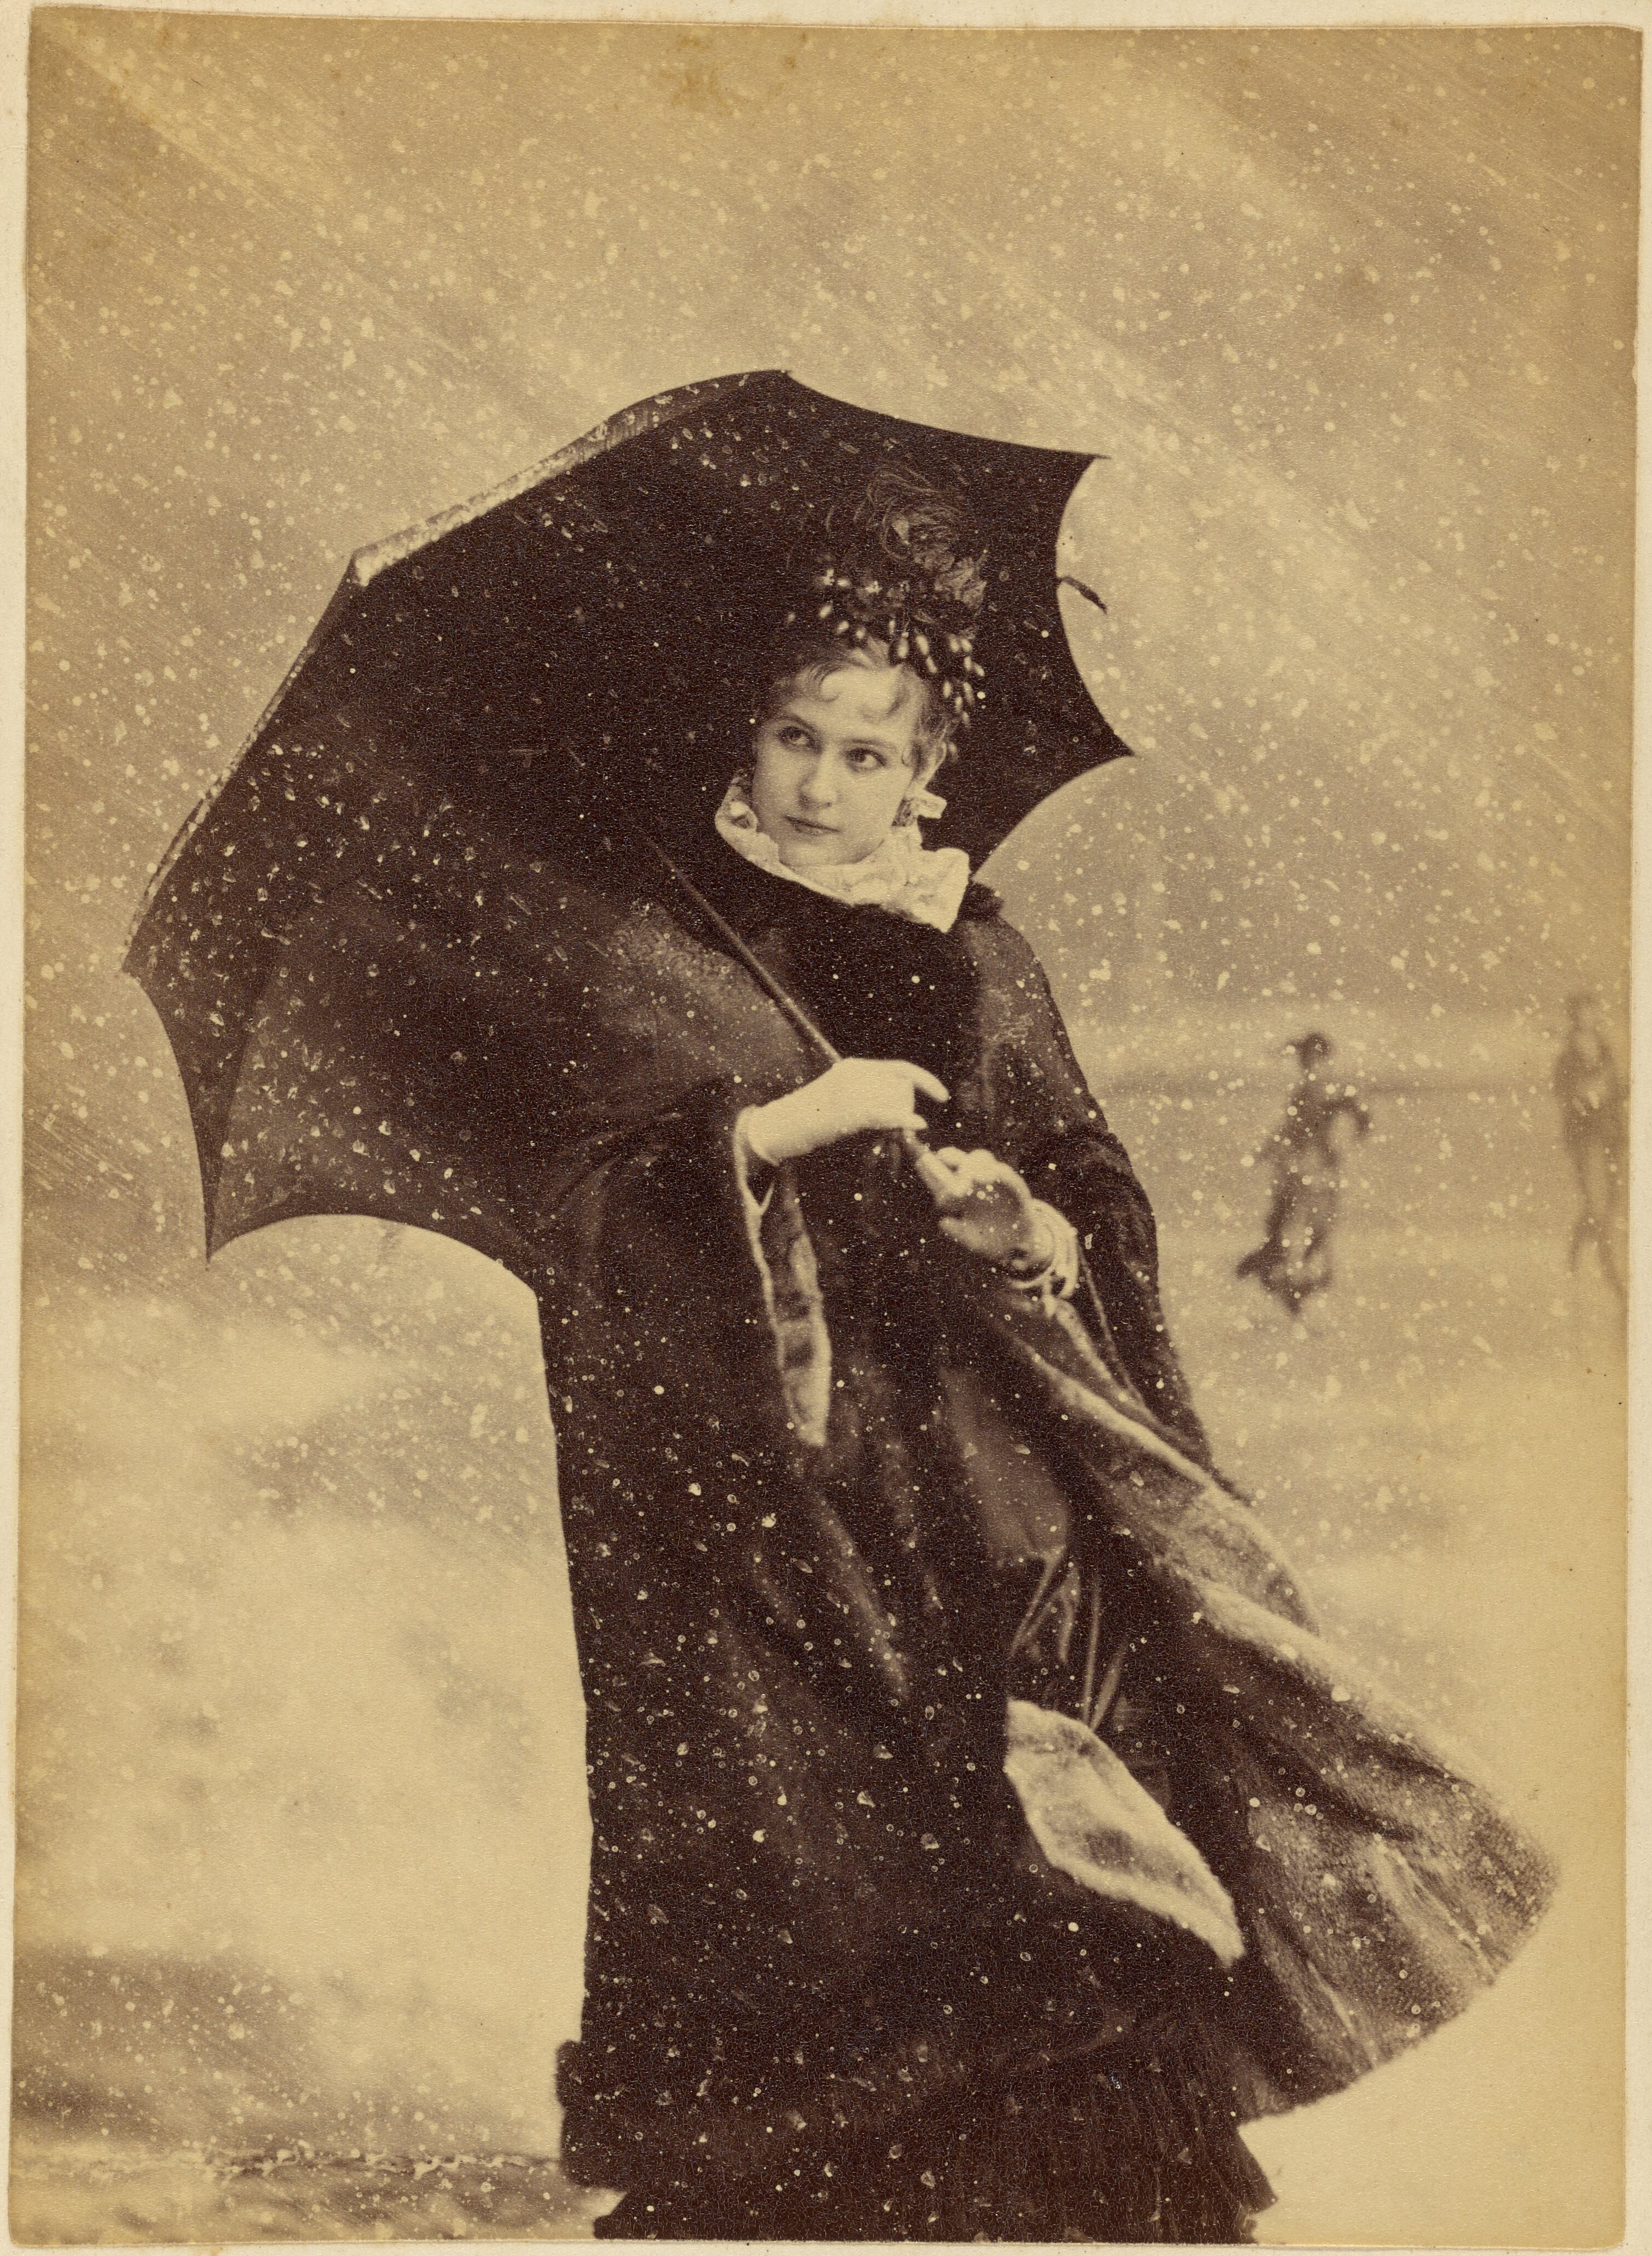 Woman with an umbrella in a snow storm, circa 1885.jpg